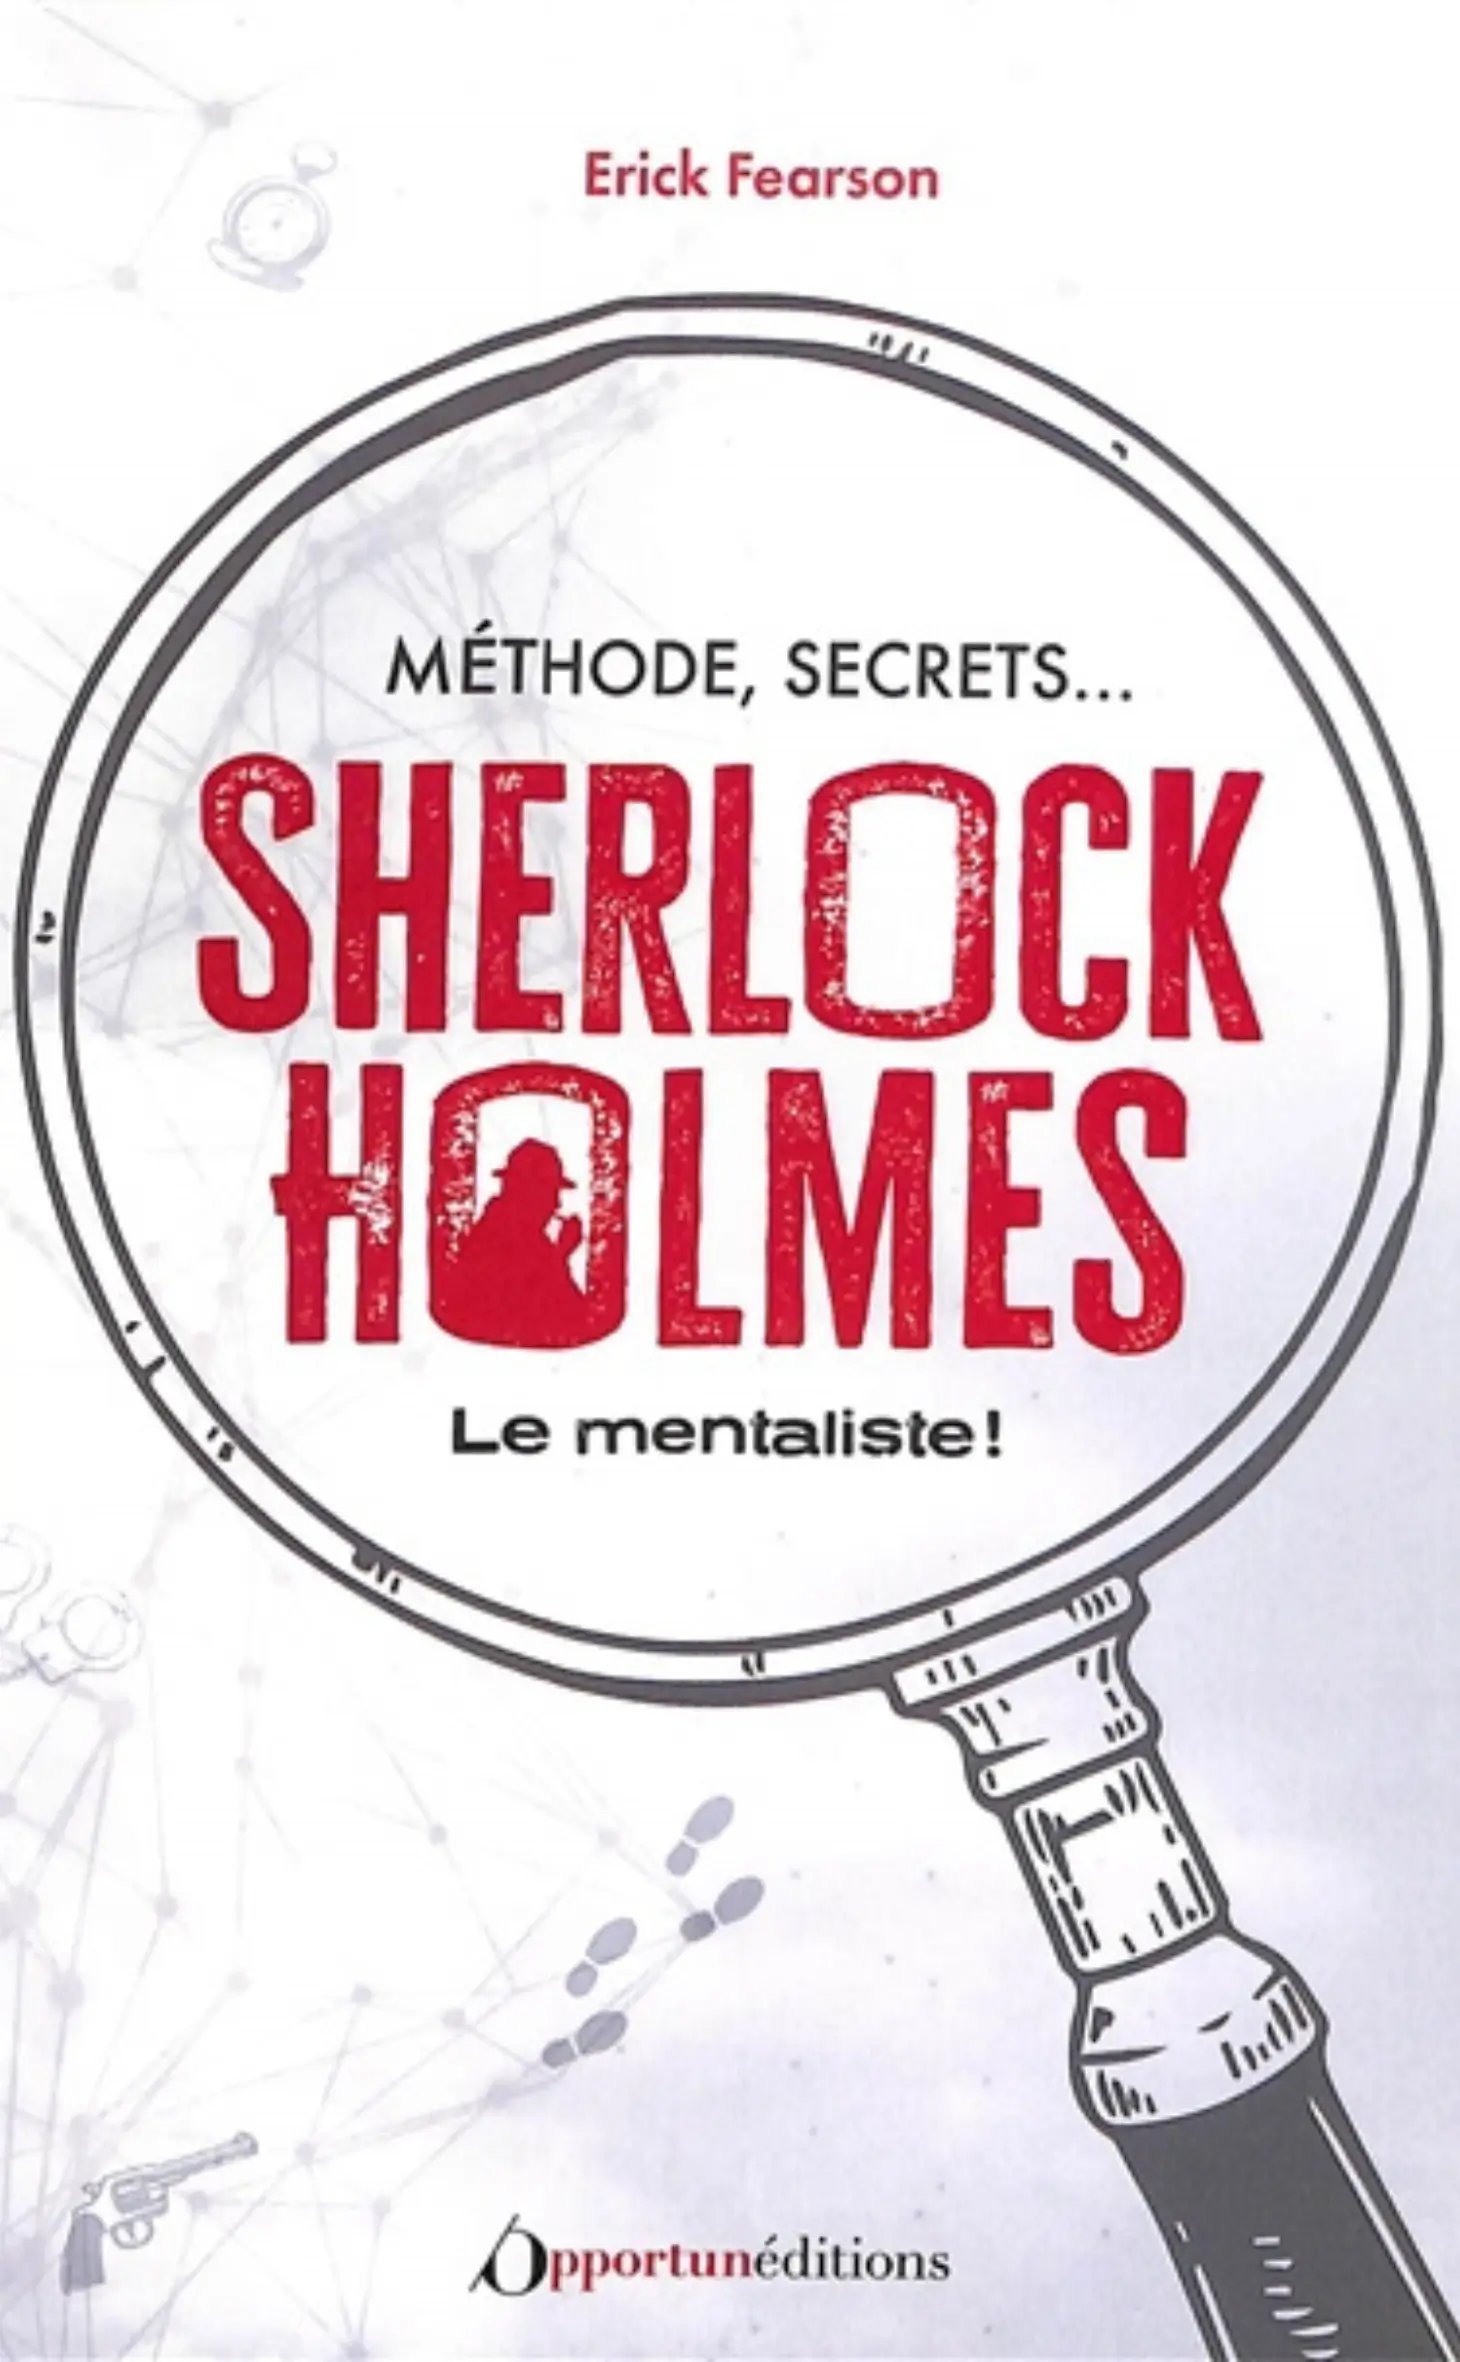 Sherlock Holmes le mentaliste avec Erick Fearson